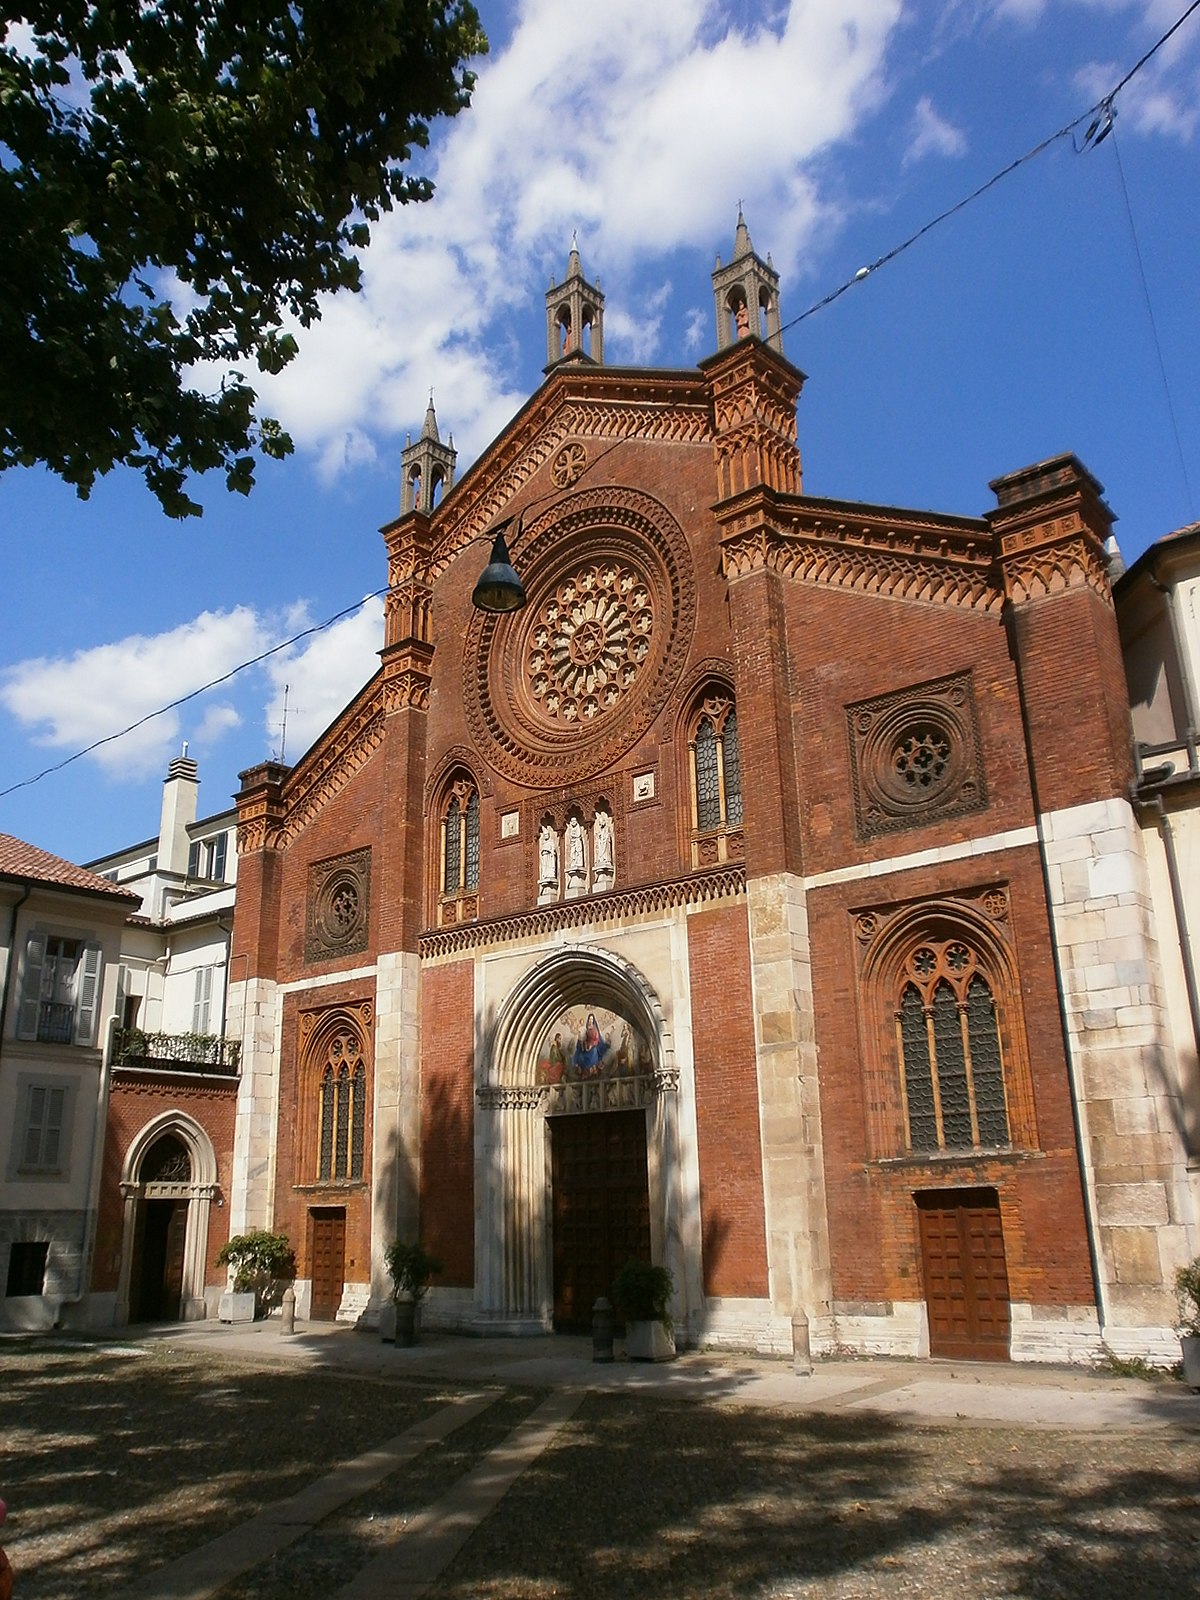 Mediolan: Kościół San Marco